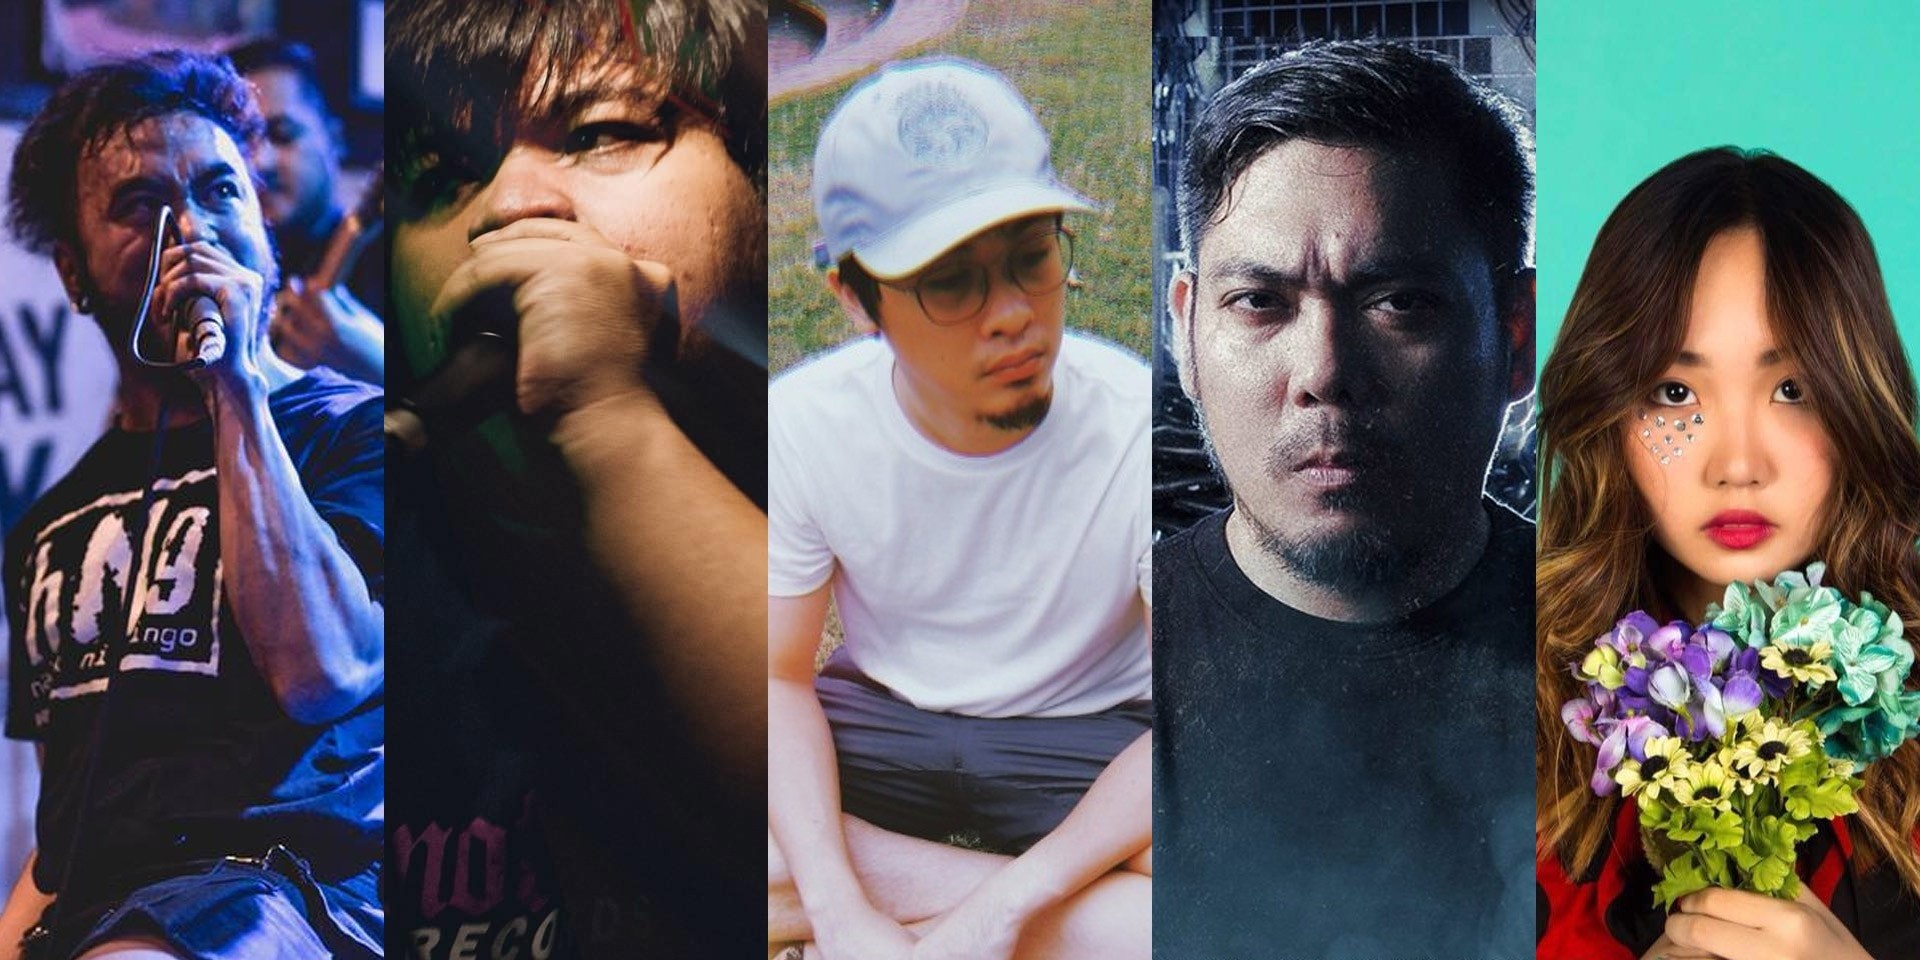 Halik Ni Gringo, Calix, Nights of Rizal, SkyChurch, Ena Mori release new music – listen